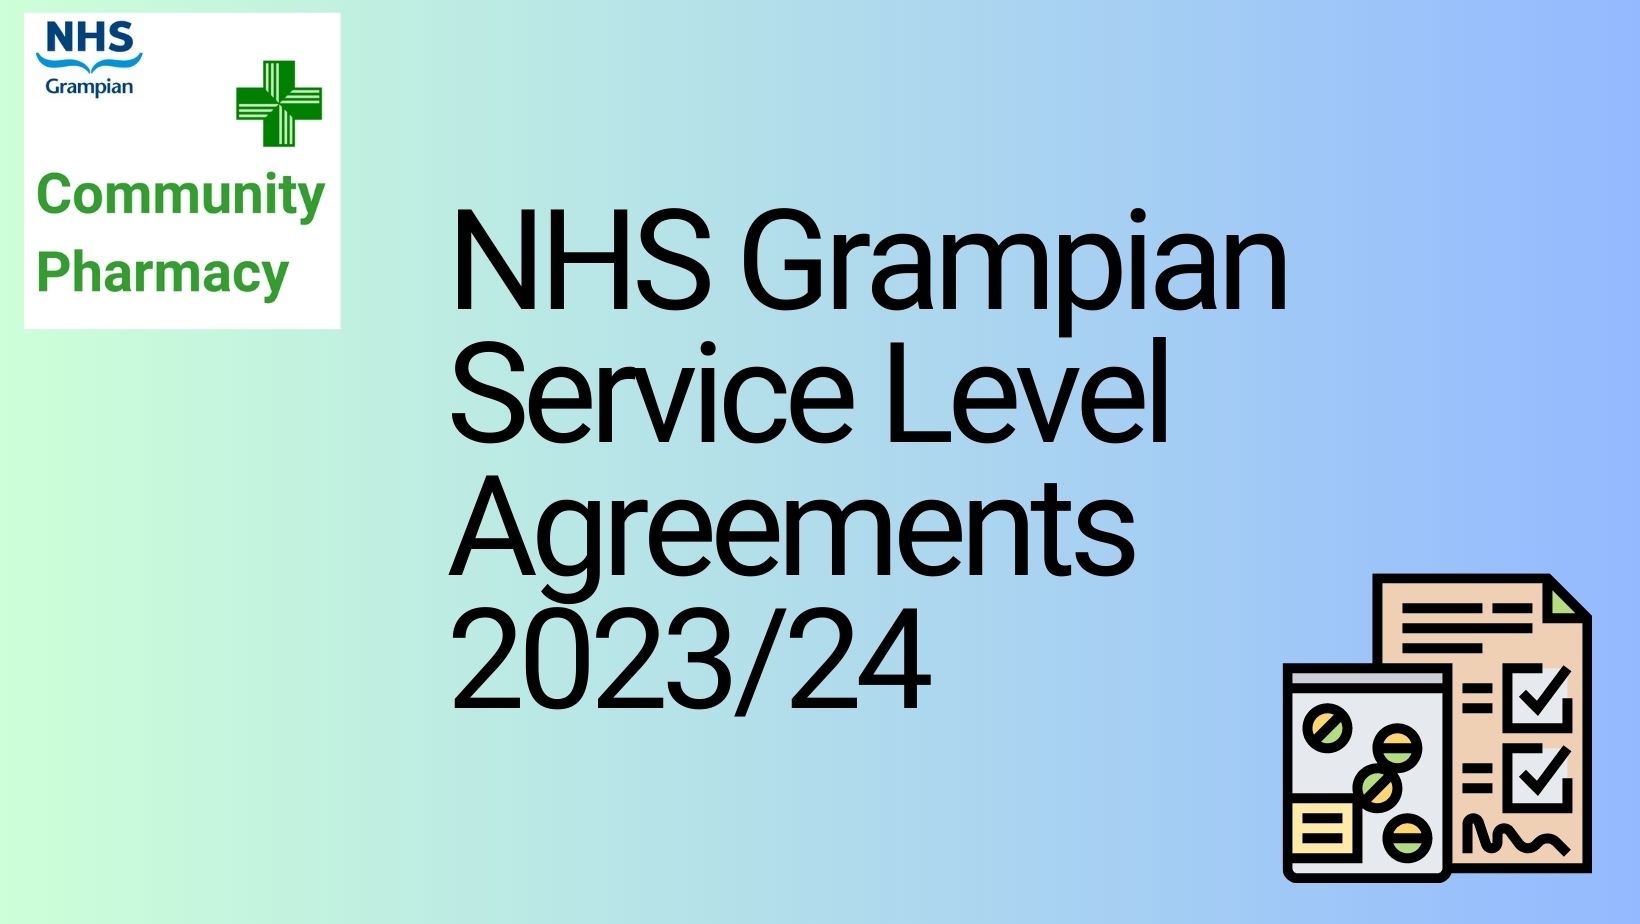 NHS Grampian Service Level Agreements 202324.jpg